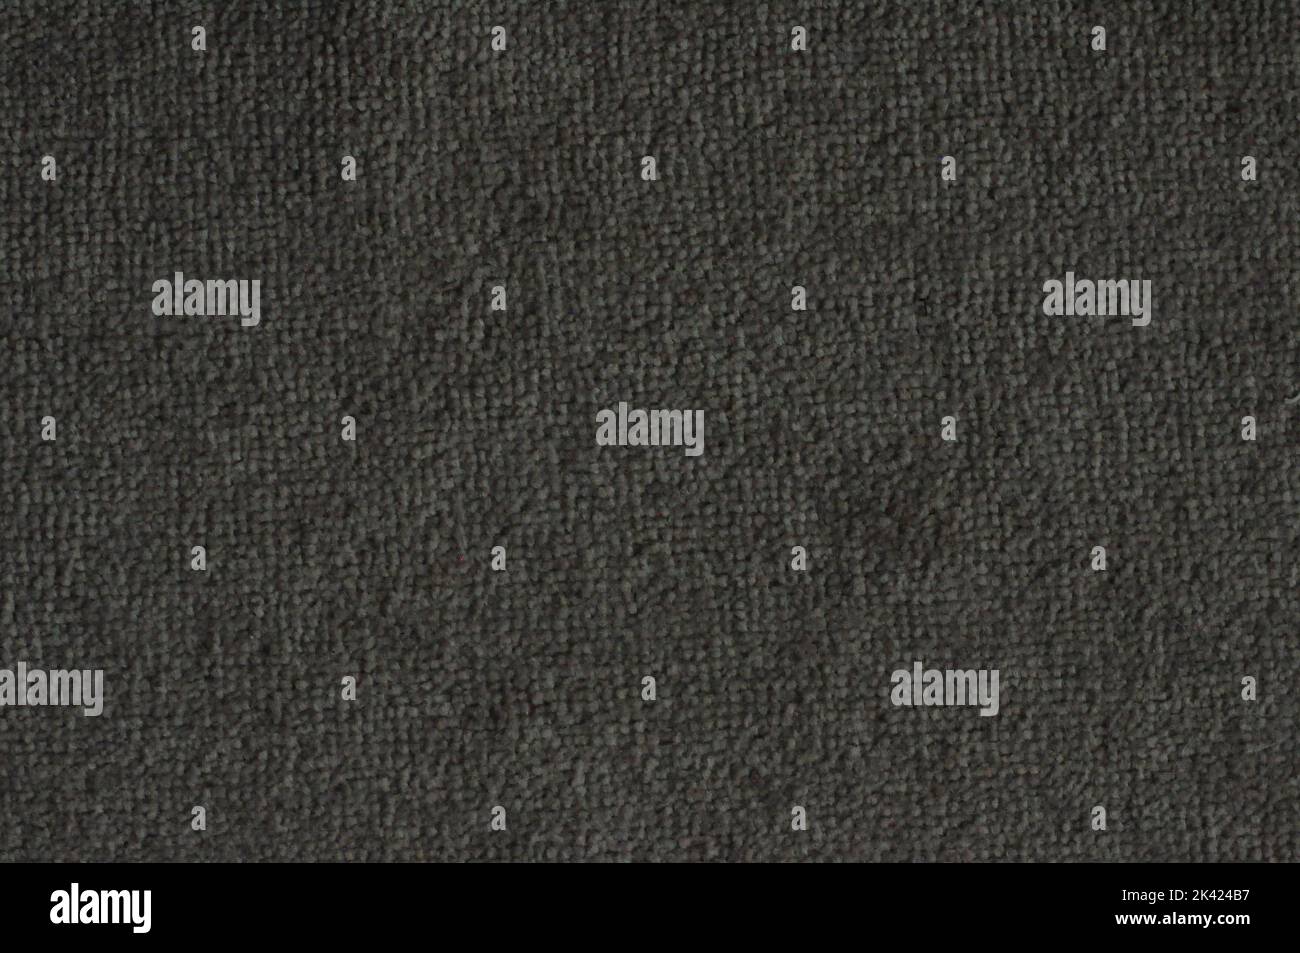 Material carpet texture background photo Stock Photo - Alamy